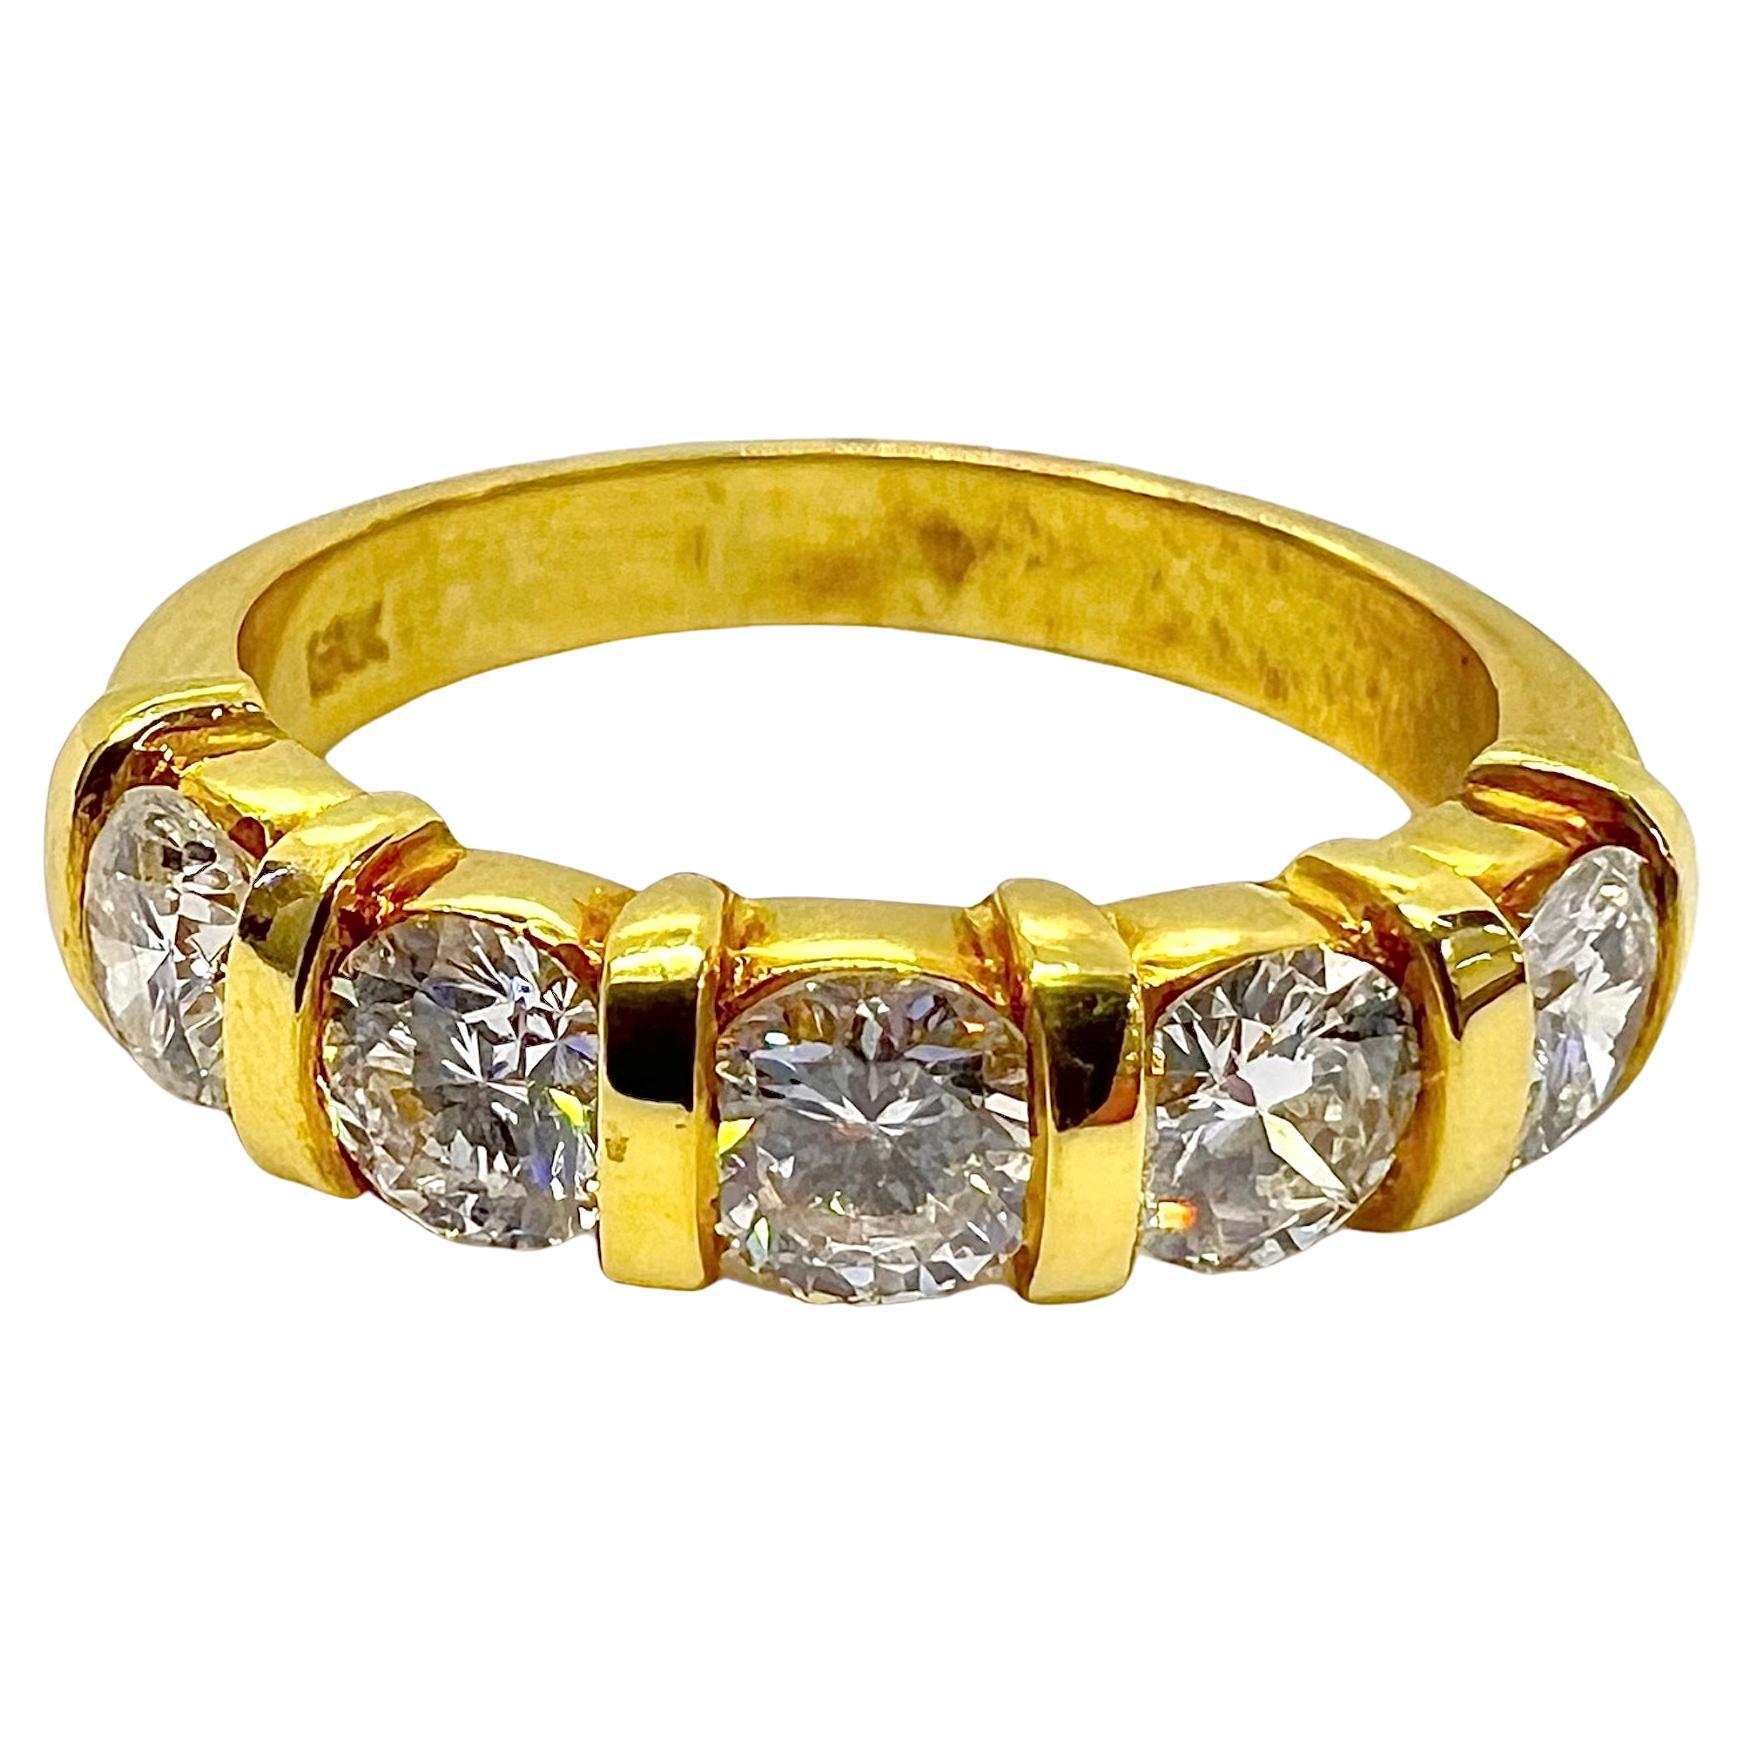 Sophia D. 18K Yellow Gold Ring with Round Diamonds 